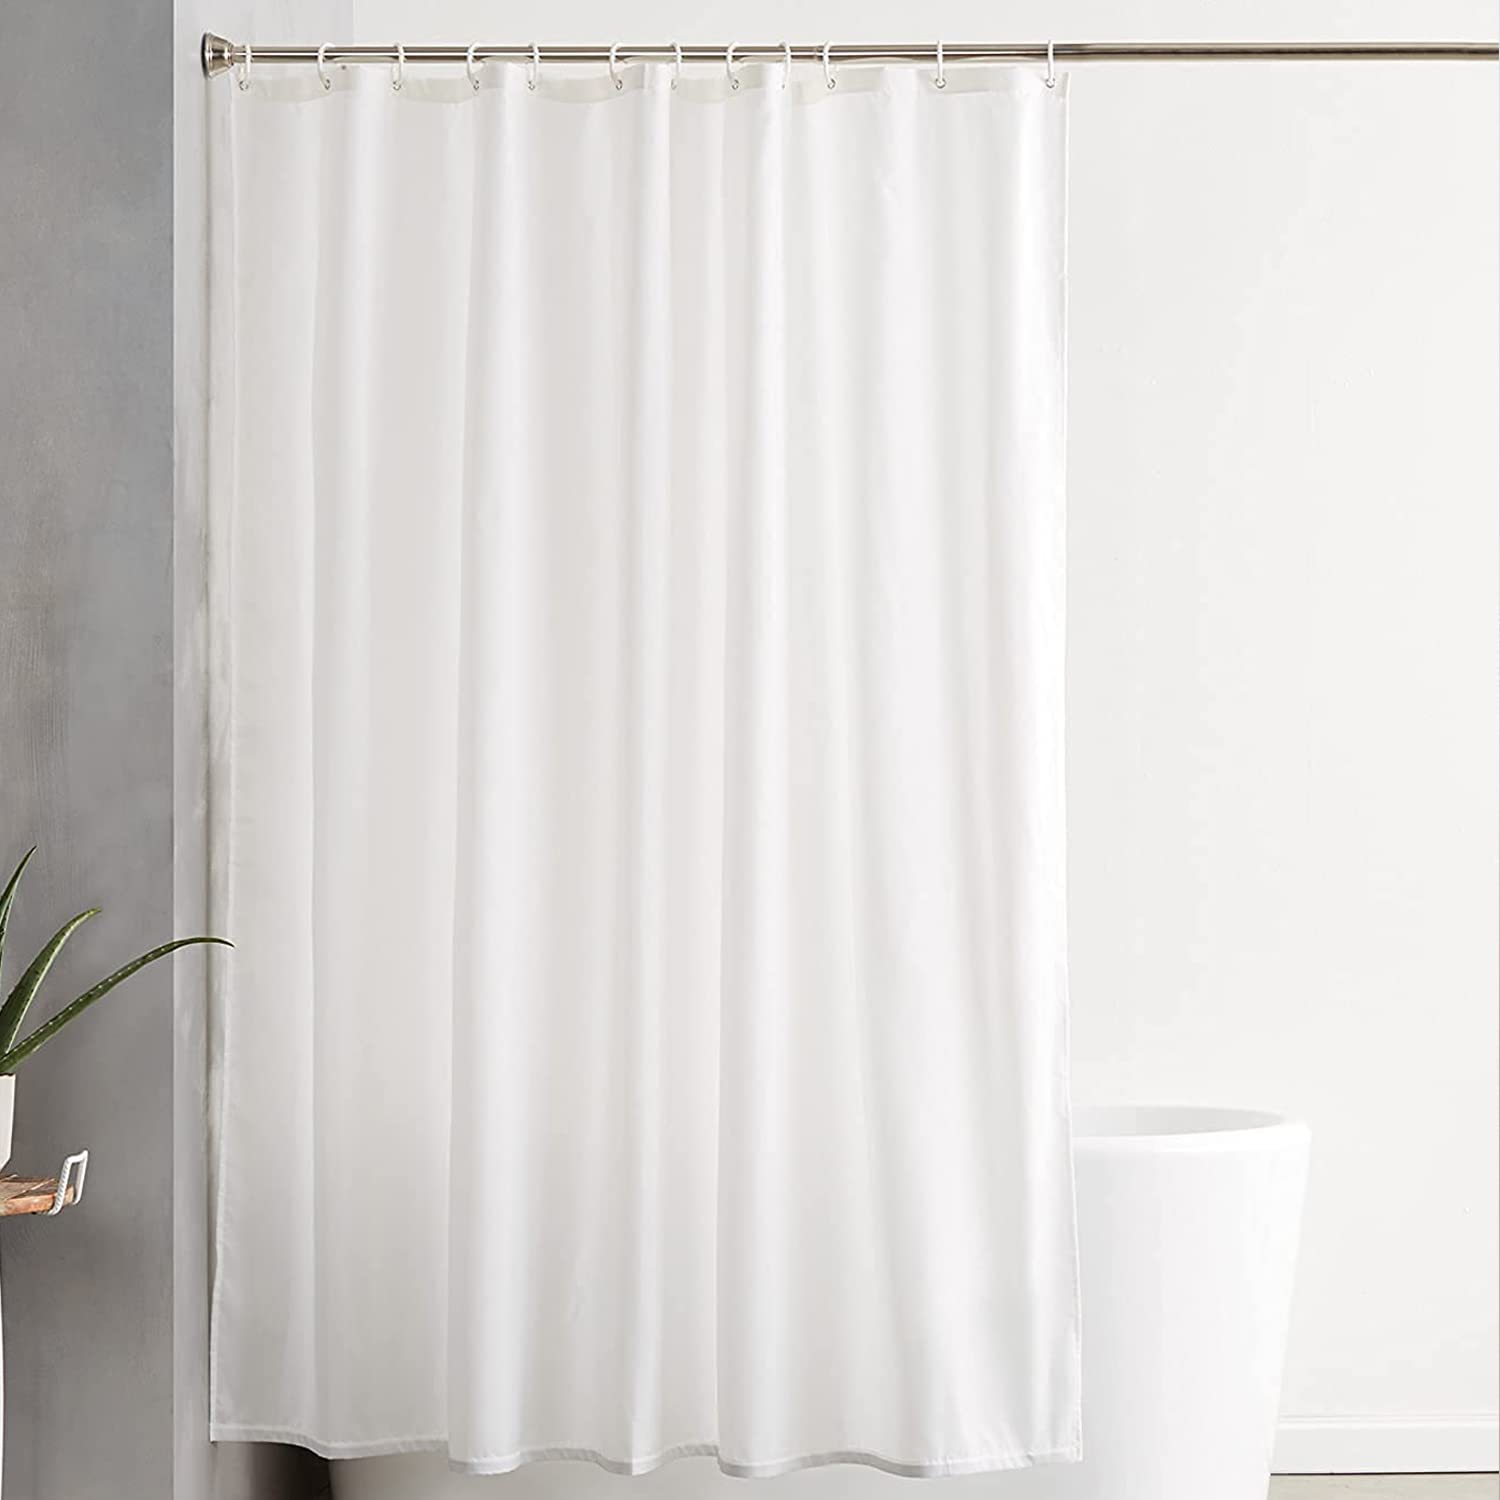 Shower Curtain Retro Coffee House Design Waterproof Fabric 72 inch 12 Hooks 